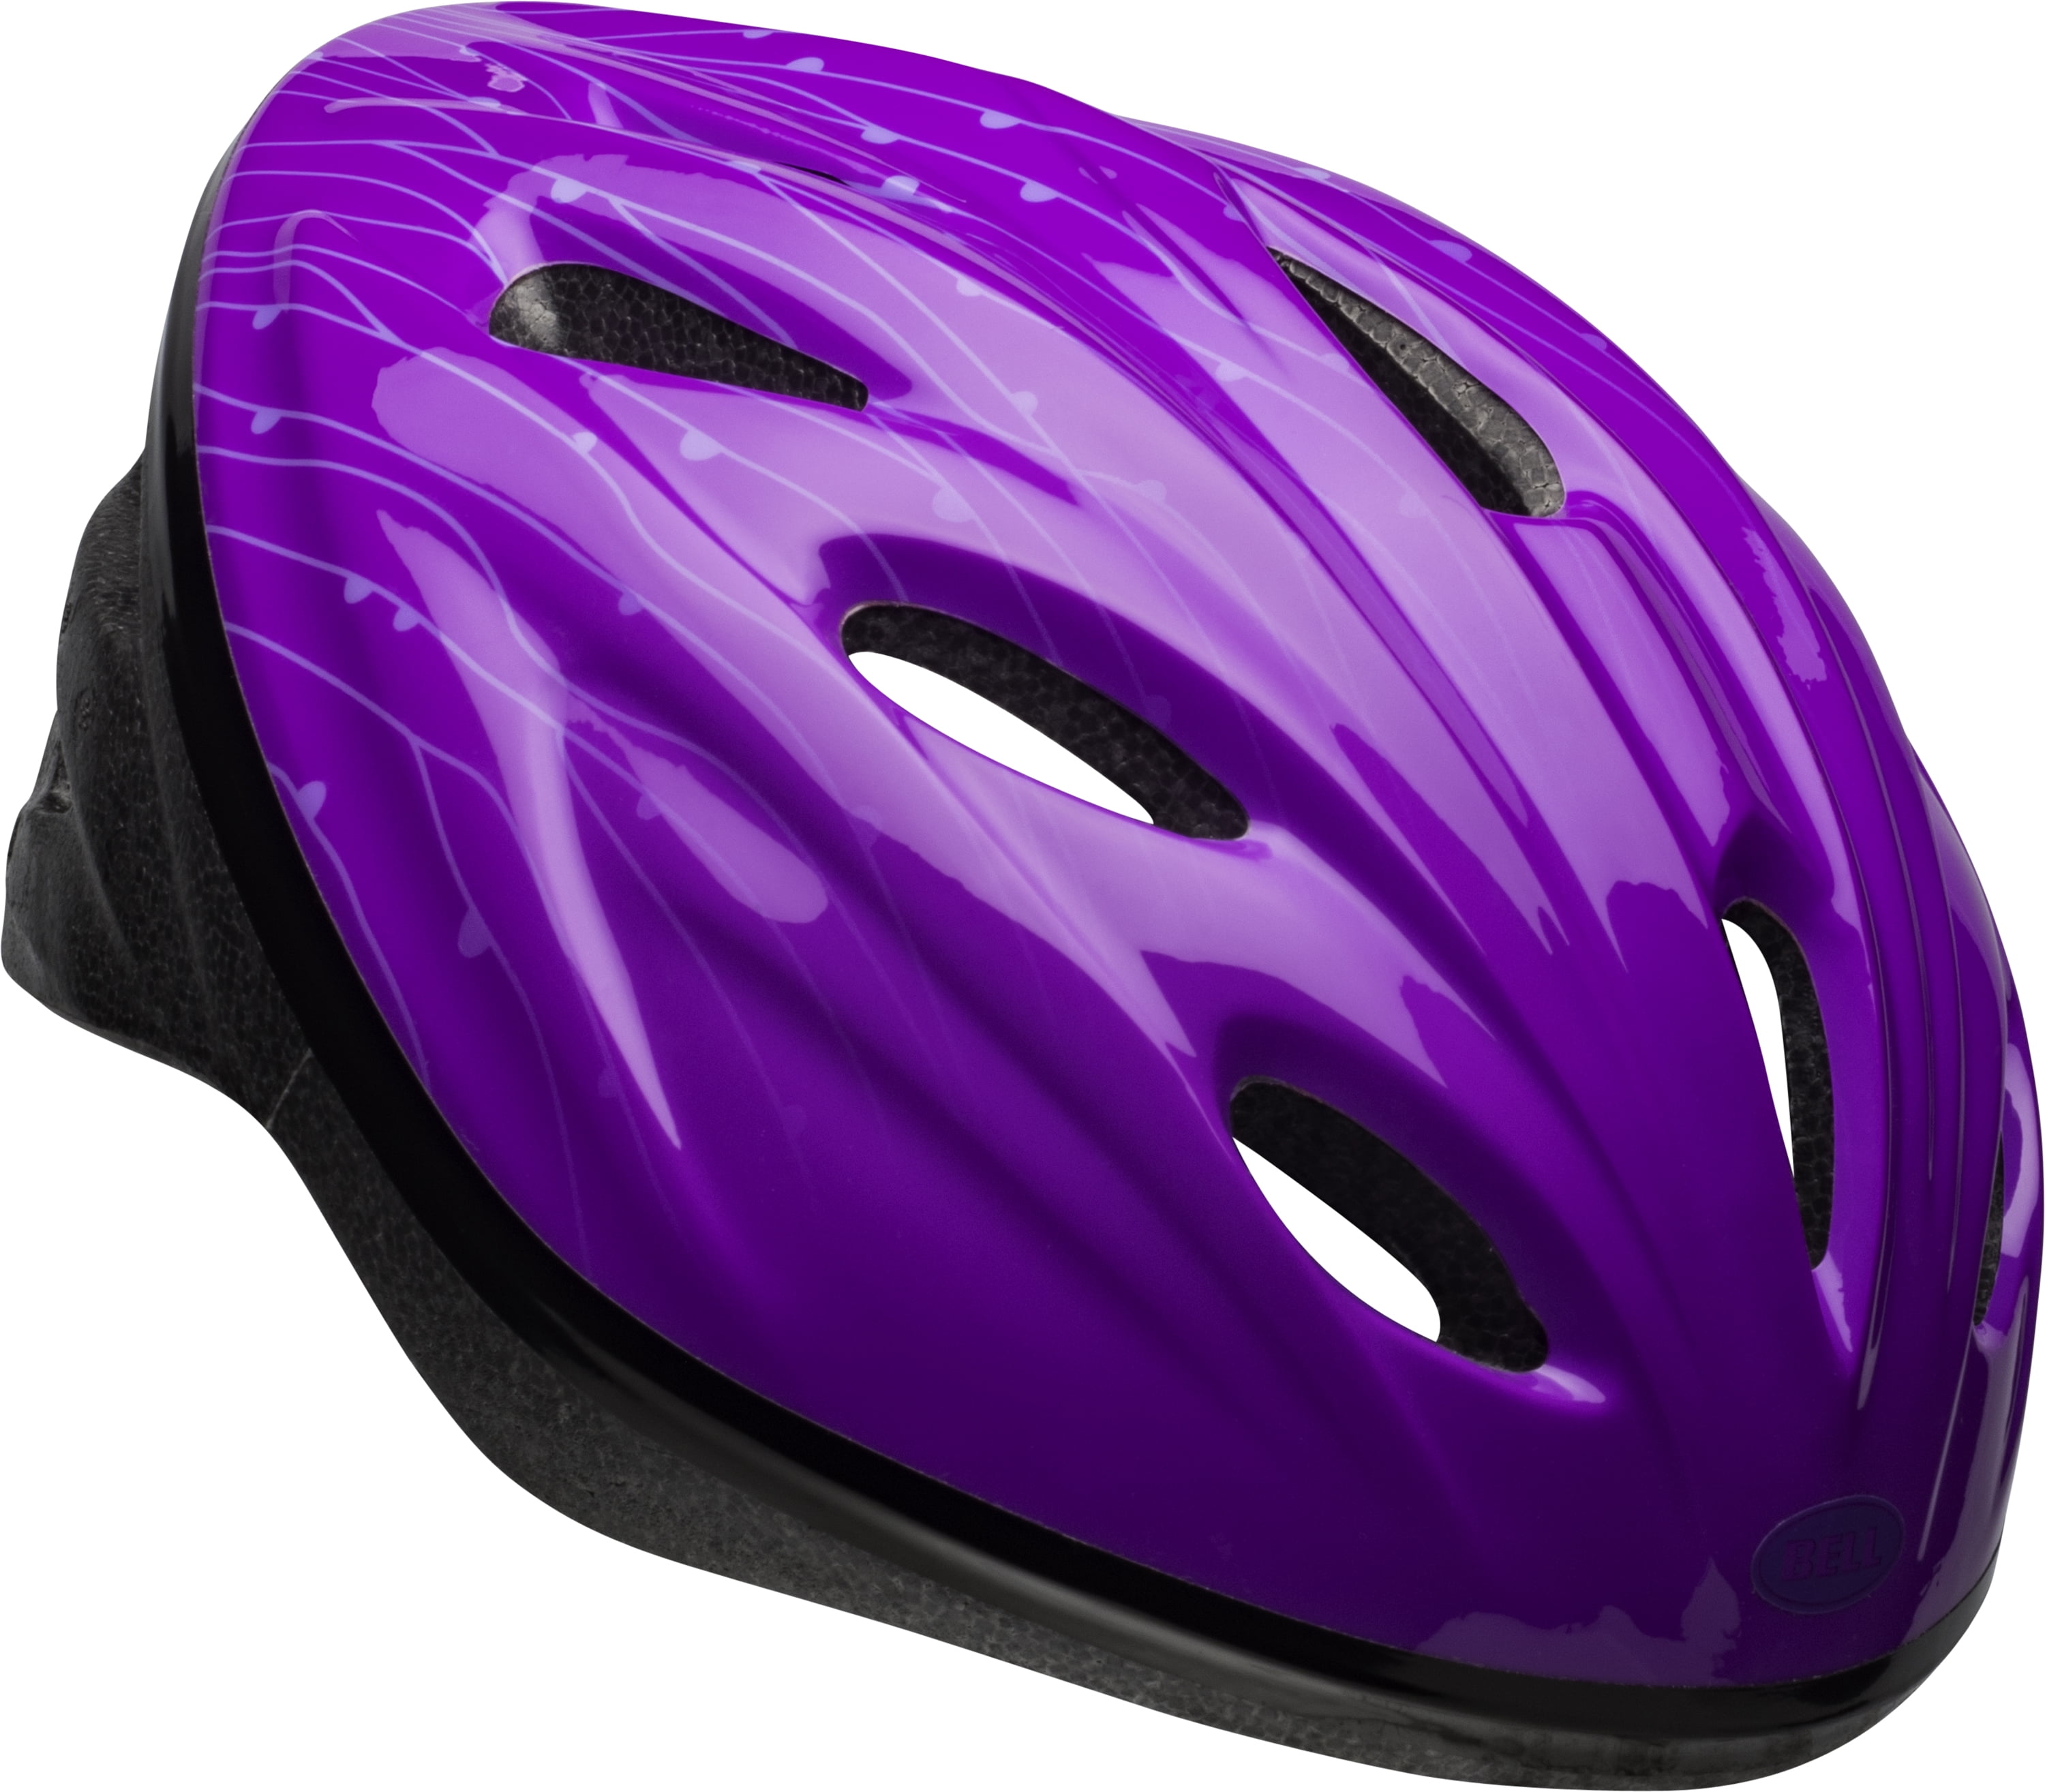 Details about   Kids Bike Helmet Purple Butterfly & Light Size 50-52cm Safety Cycling 